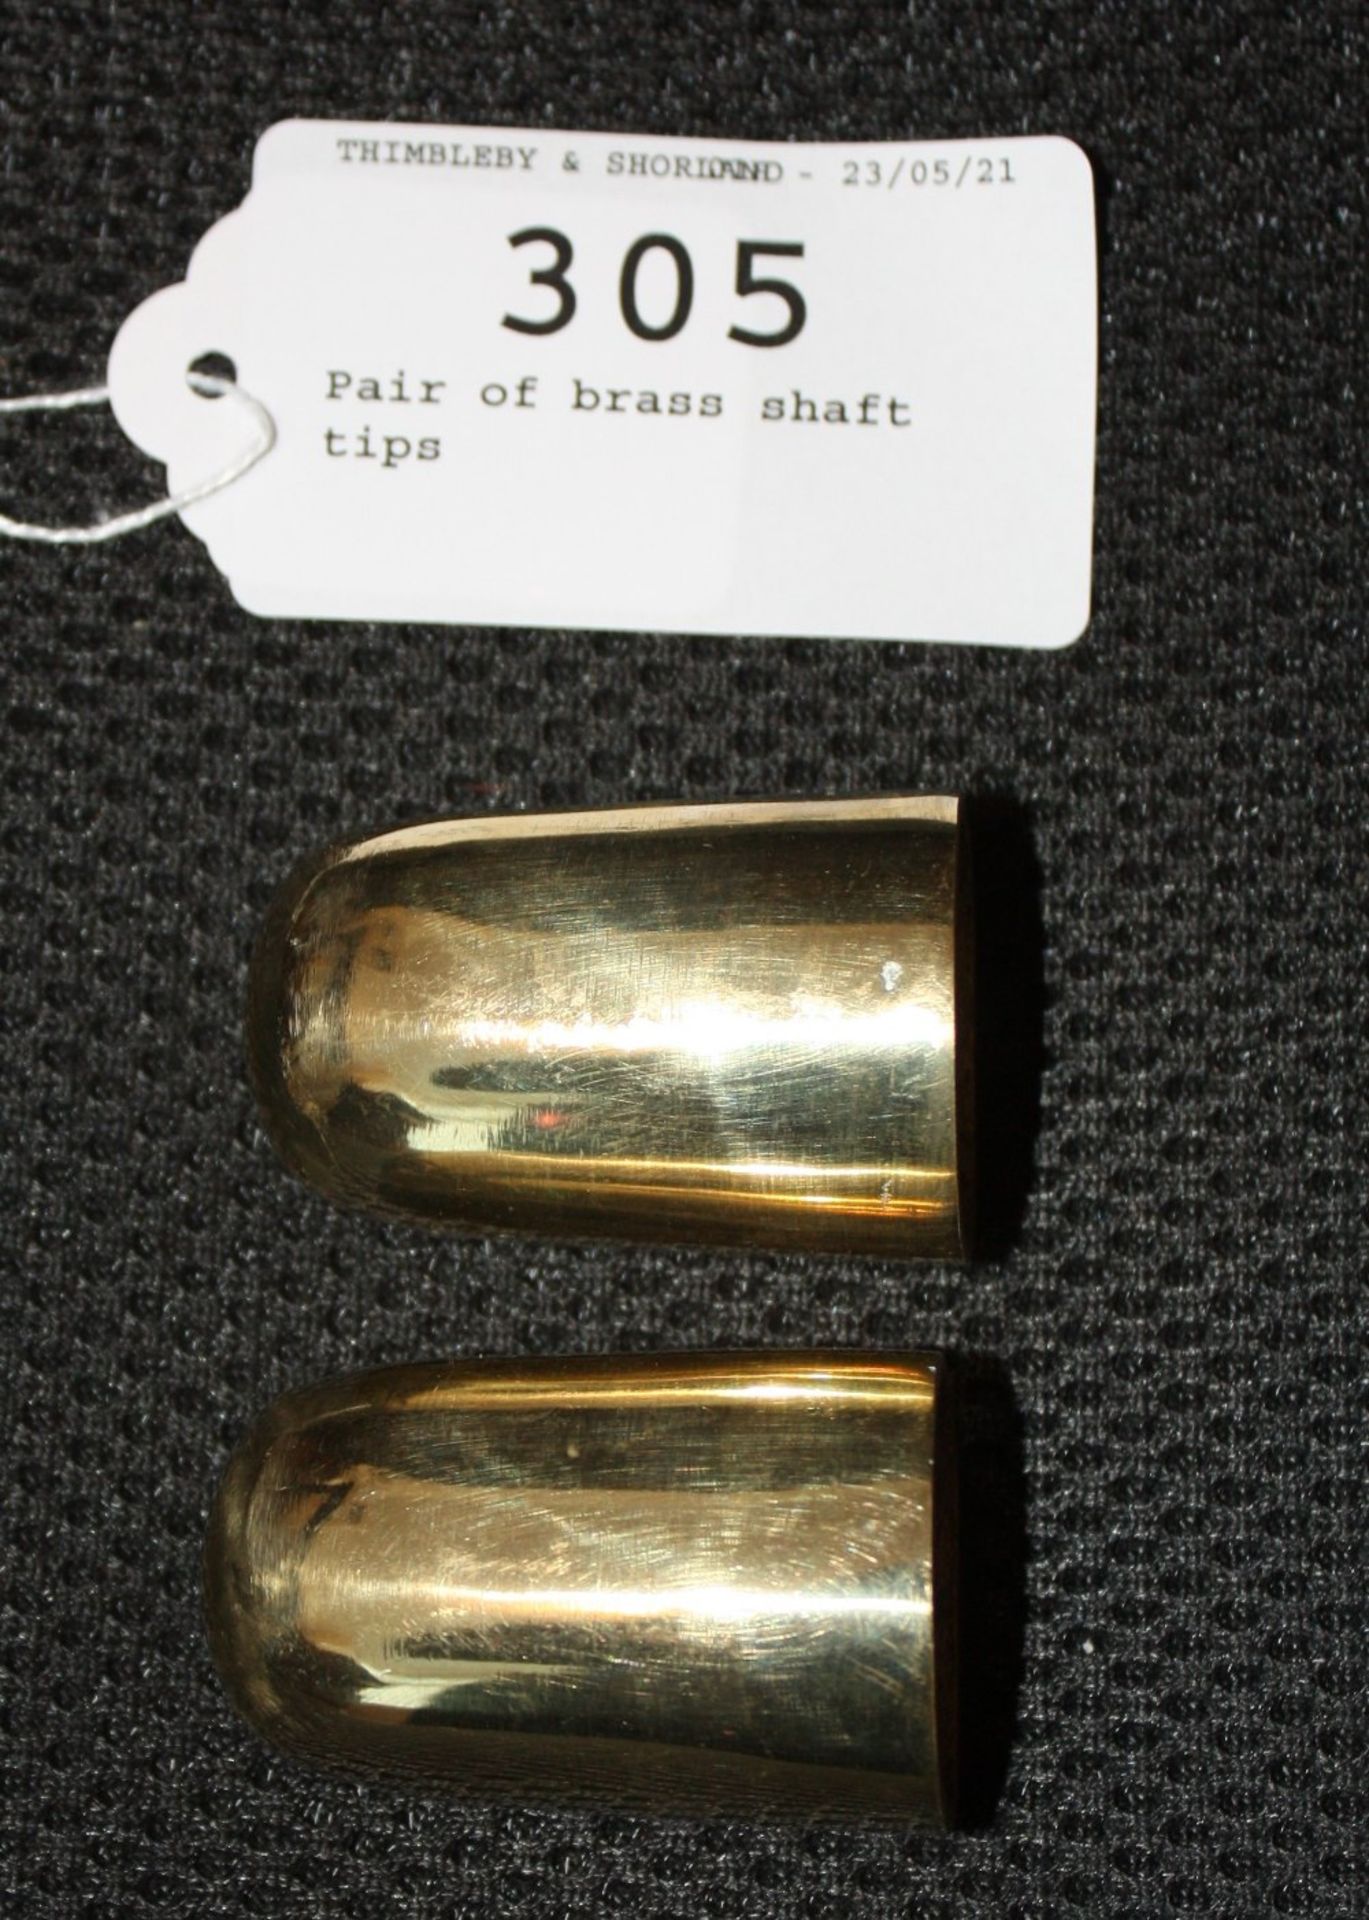 Pair of brass shaft tips.